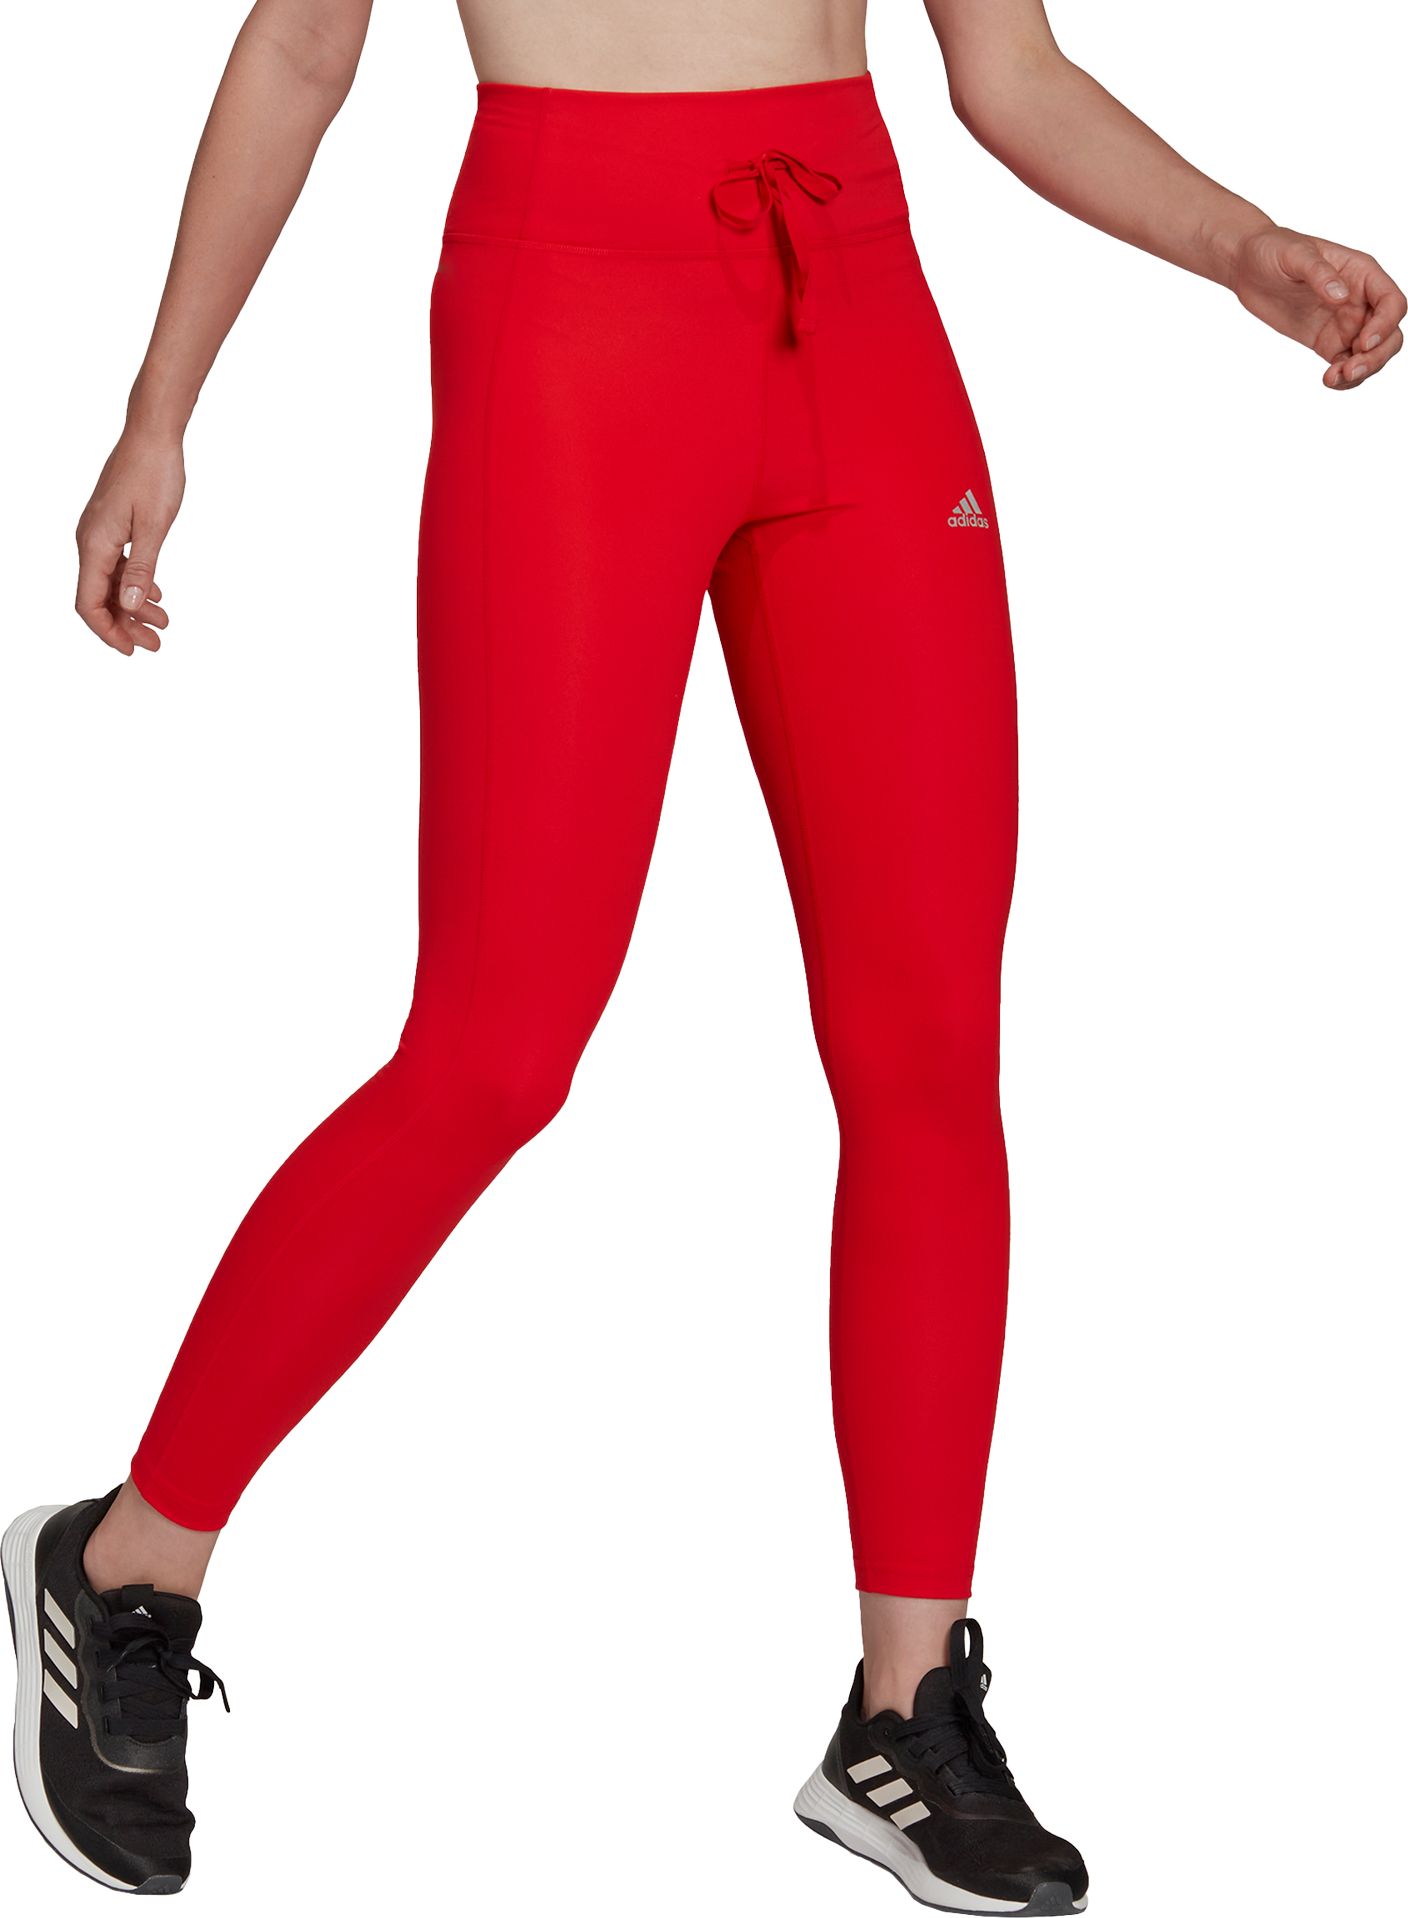 Women's Running Essentials 7/8 Tights Vivid Red/White, Buy Women's Running  Essentials 7/8 Tights Vivid Red/White here